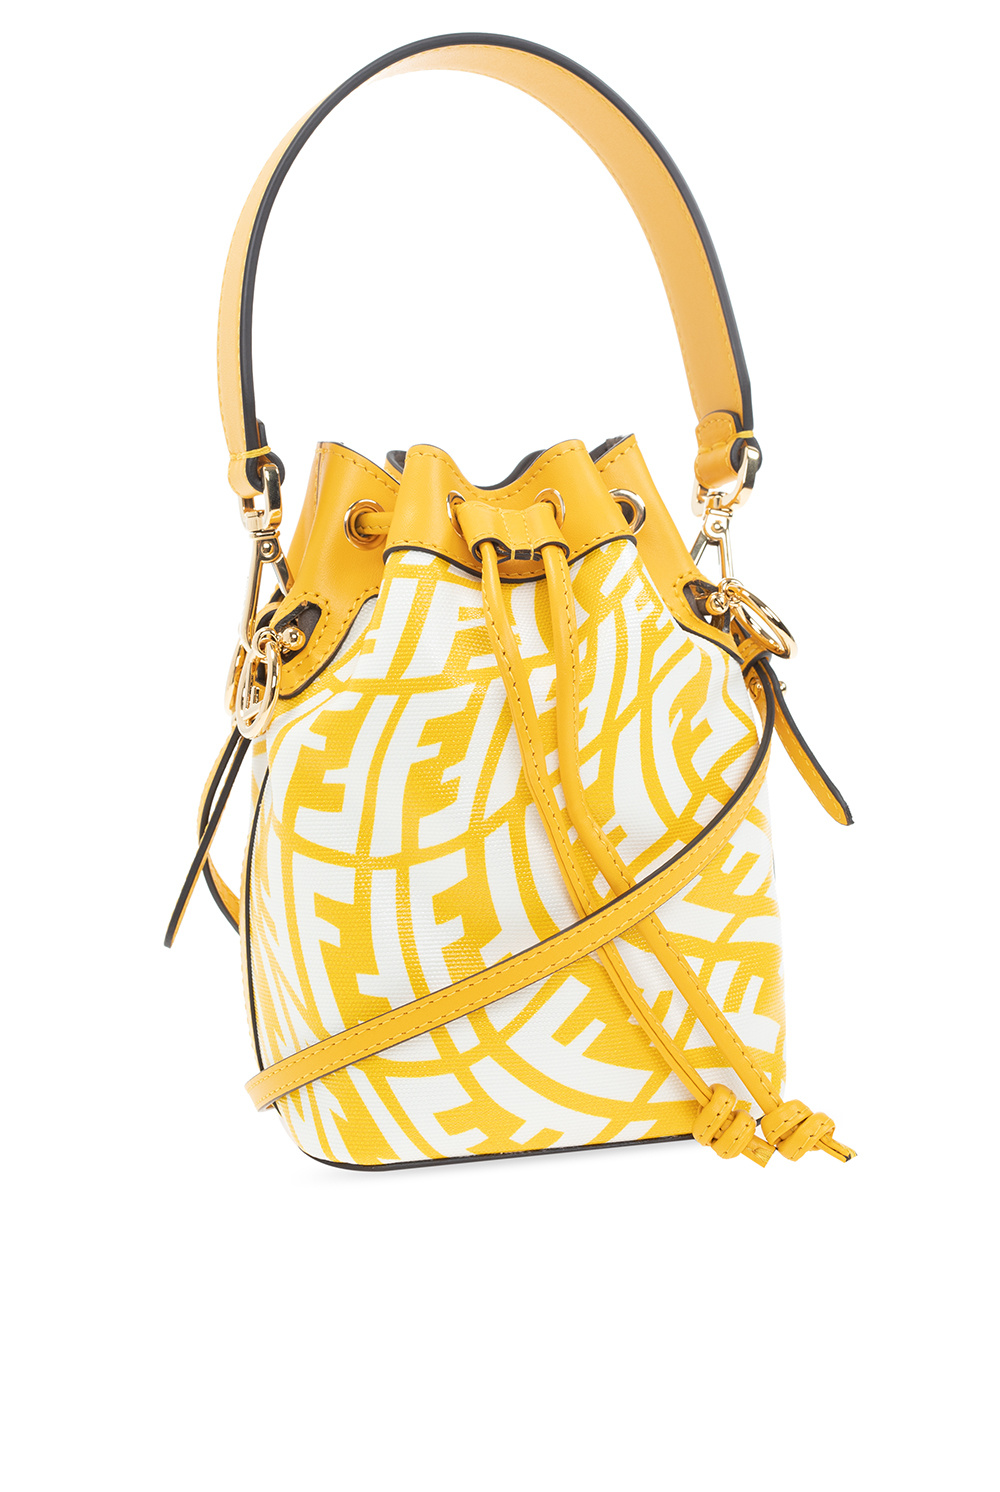 fendi backpack ‘Mon Tresor Mini’ shoulder bag with logo